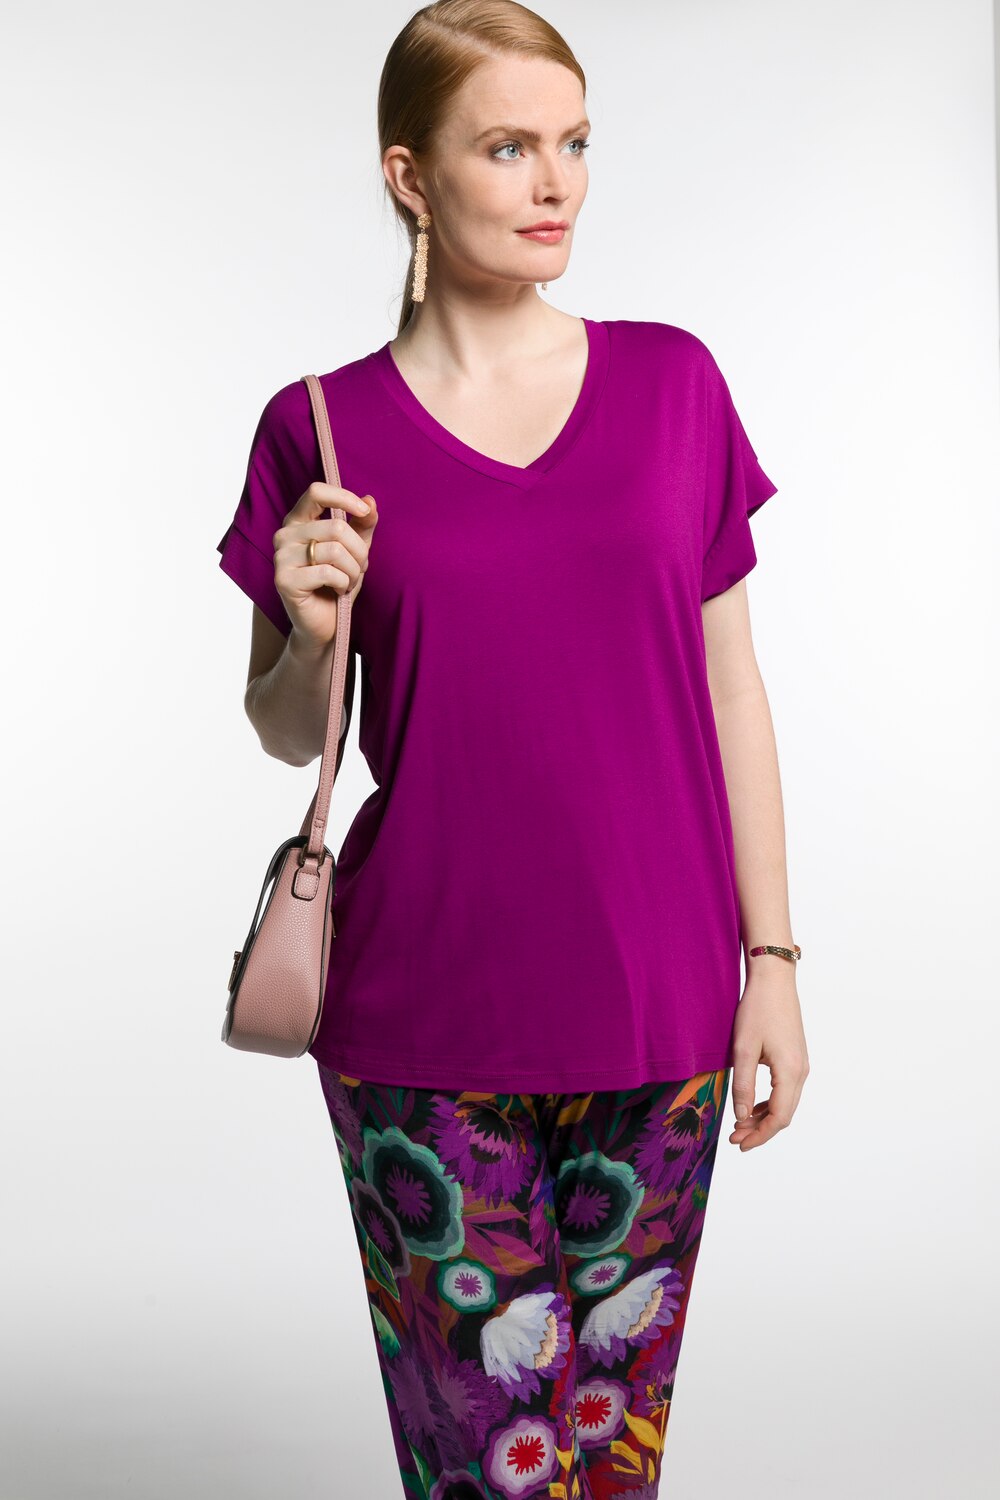 Plus Size V-Neck Crepe Stretch Knit Top, Woman, purple, size: 16/18, viscose, Ulla Popken